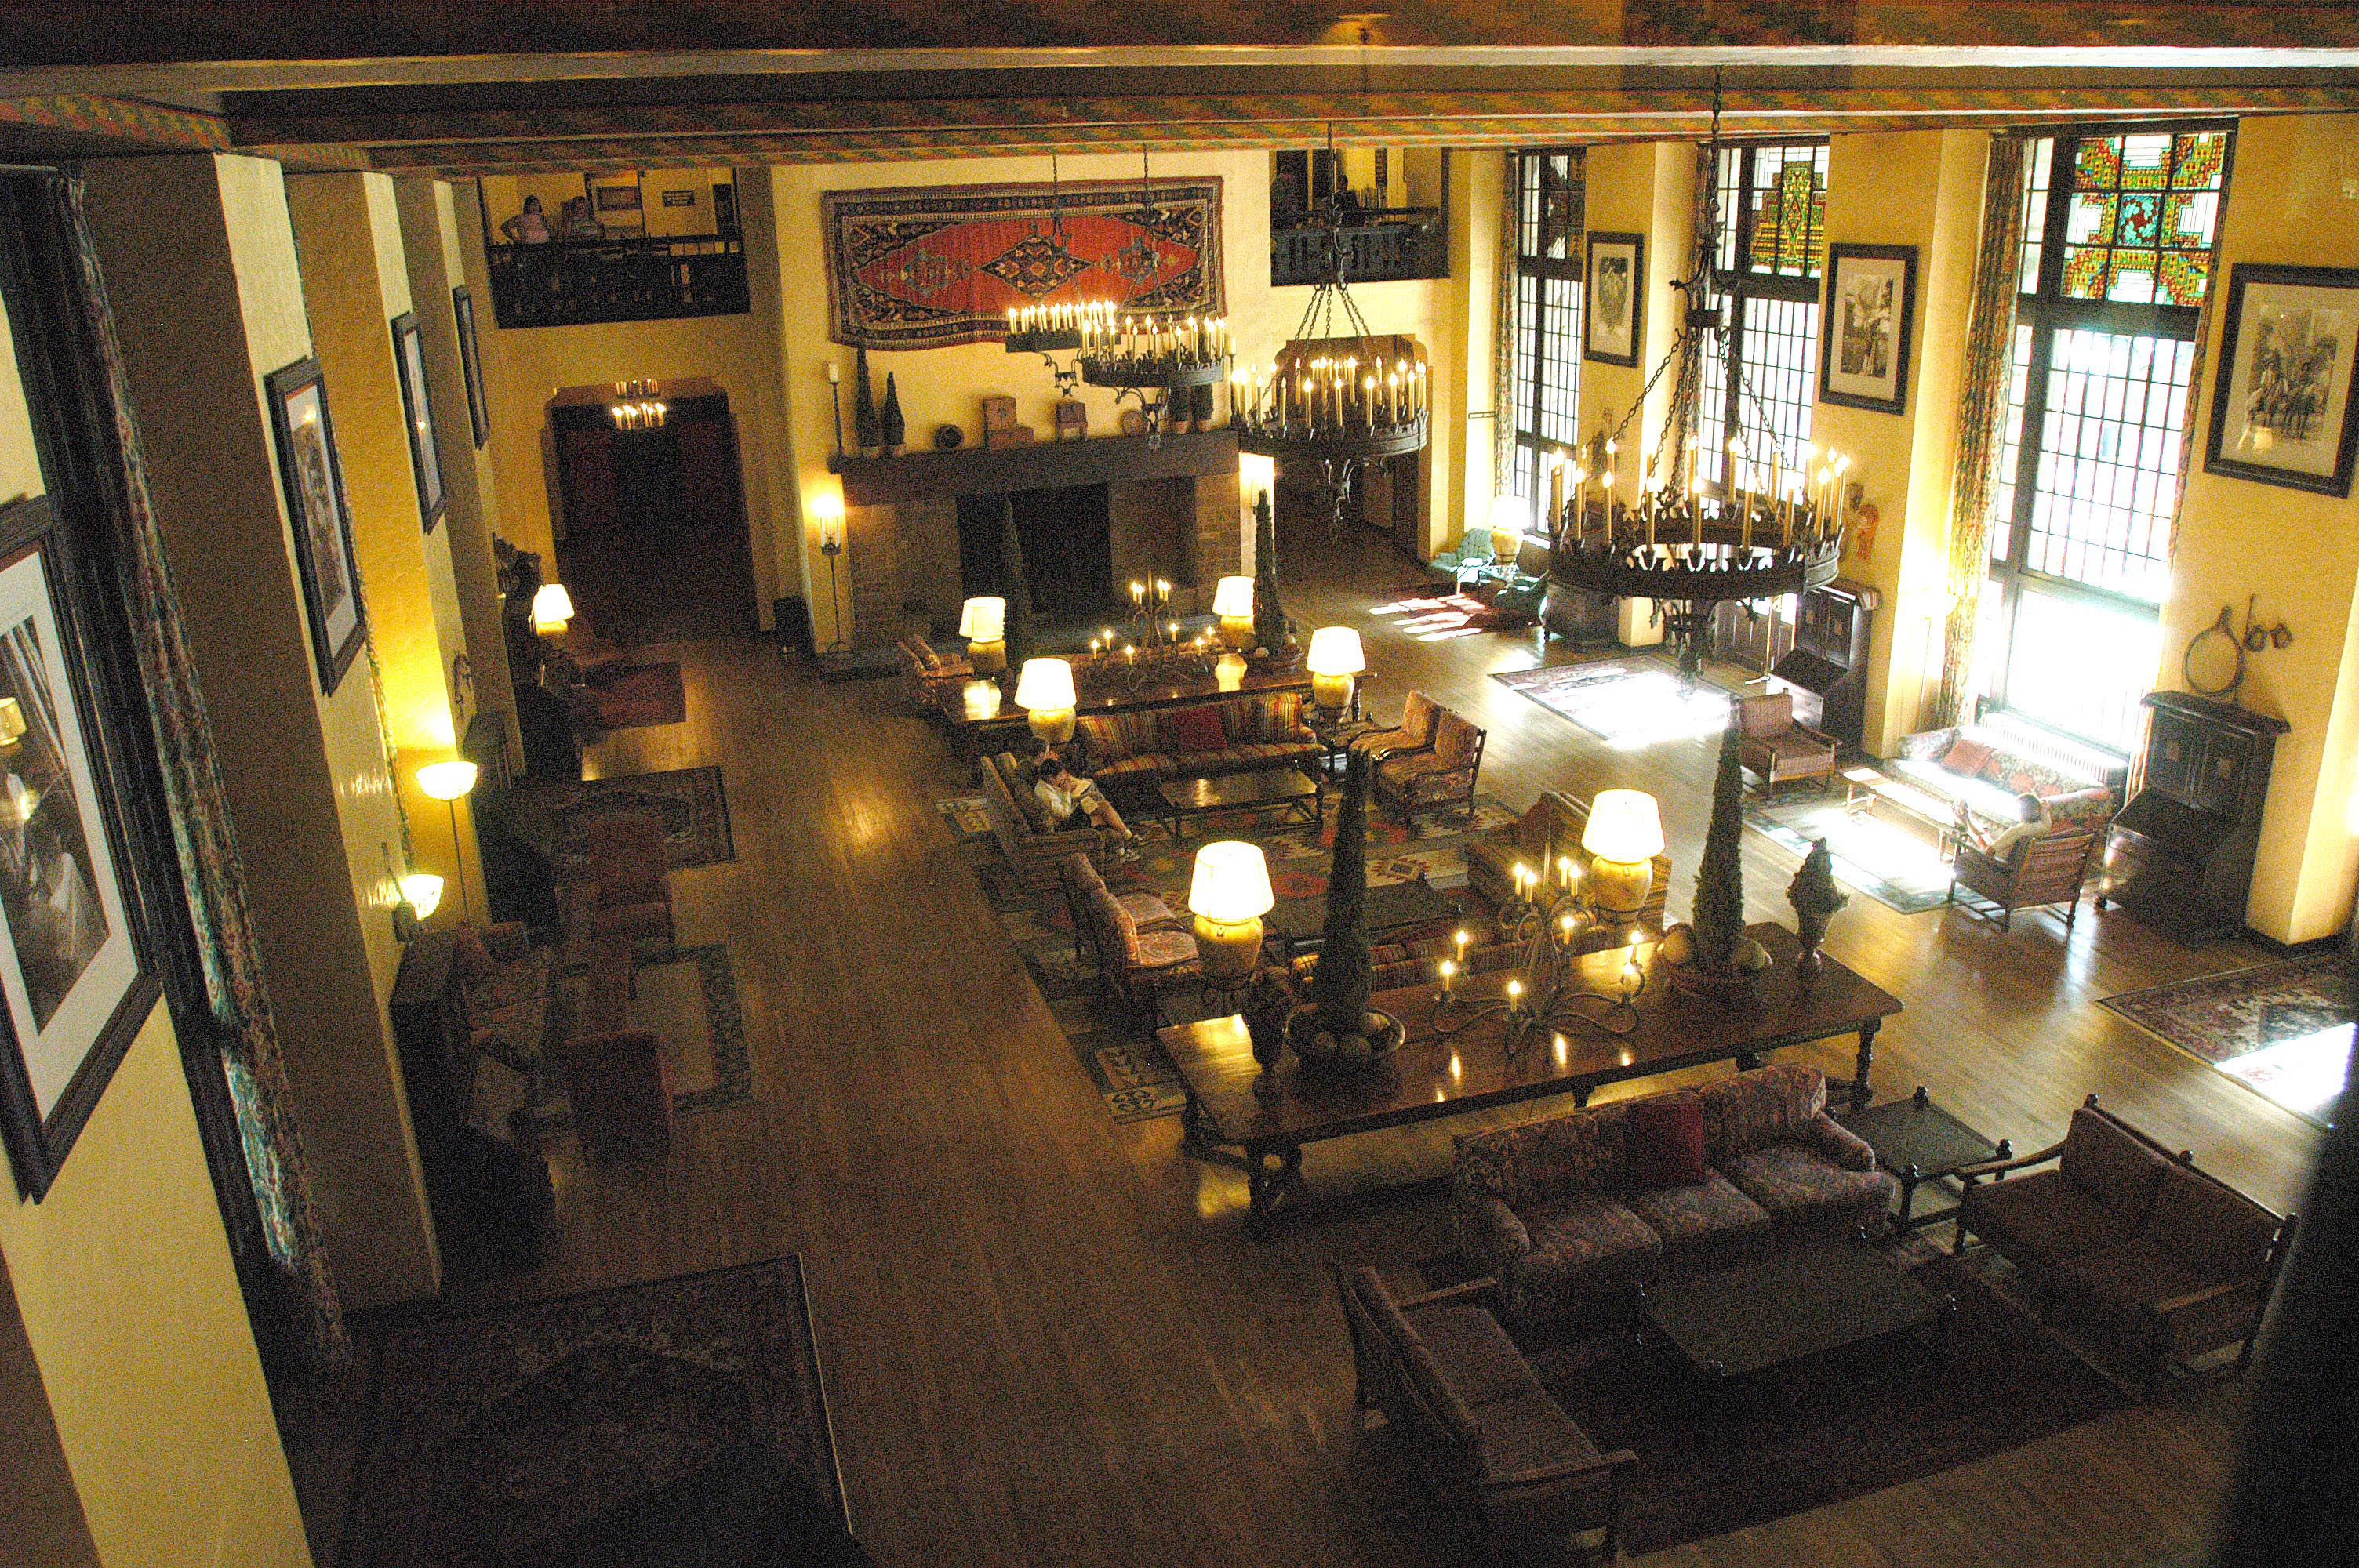 File:AHWAHNEE HOTEL IN YOSEMITE NATIONAL PARK.jpg - Wikimedia Commons